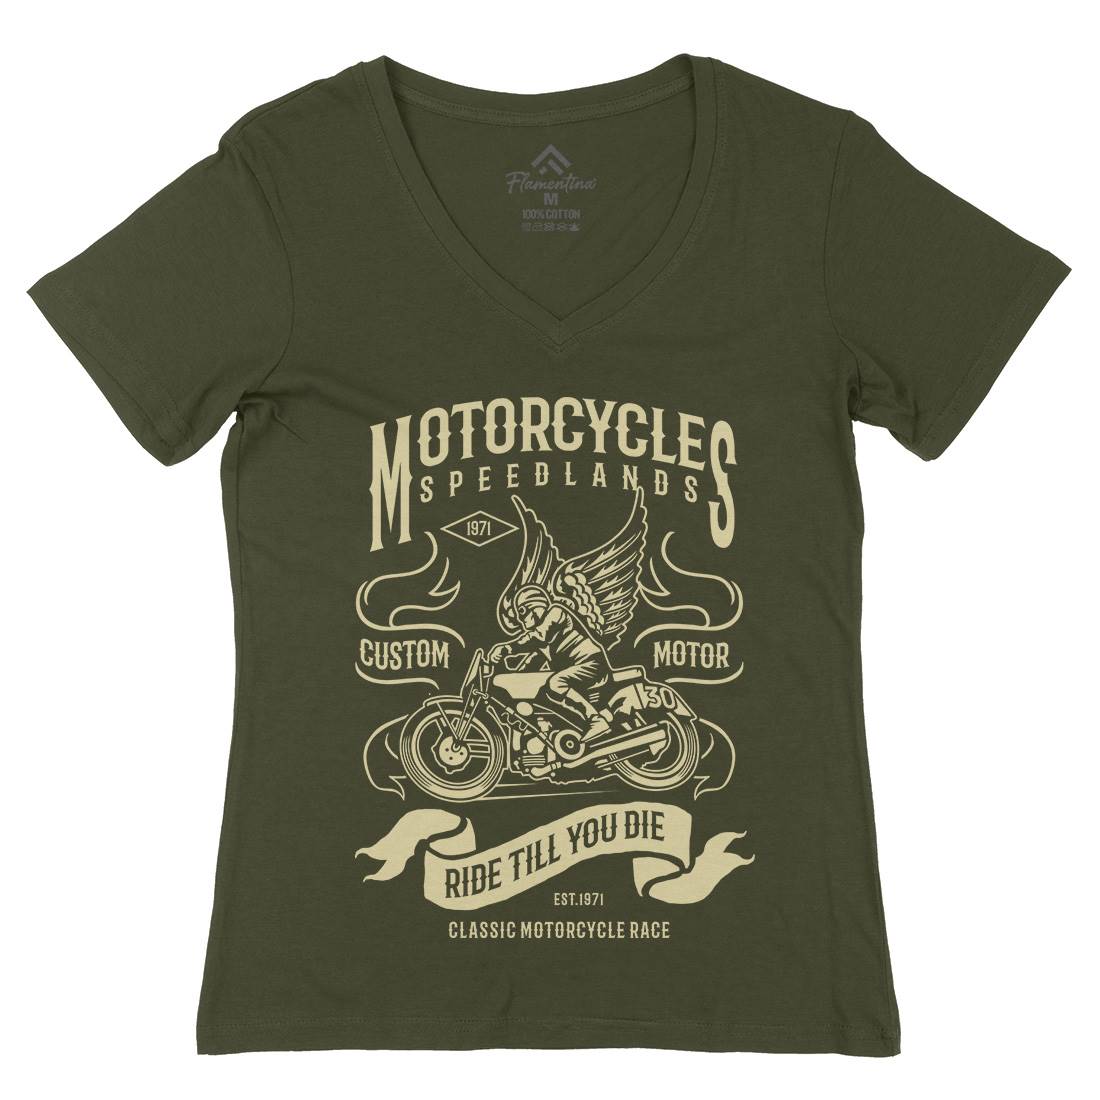 Speed Lands Womens Organic V-Neck T-Shirt Motorcycles B232